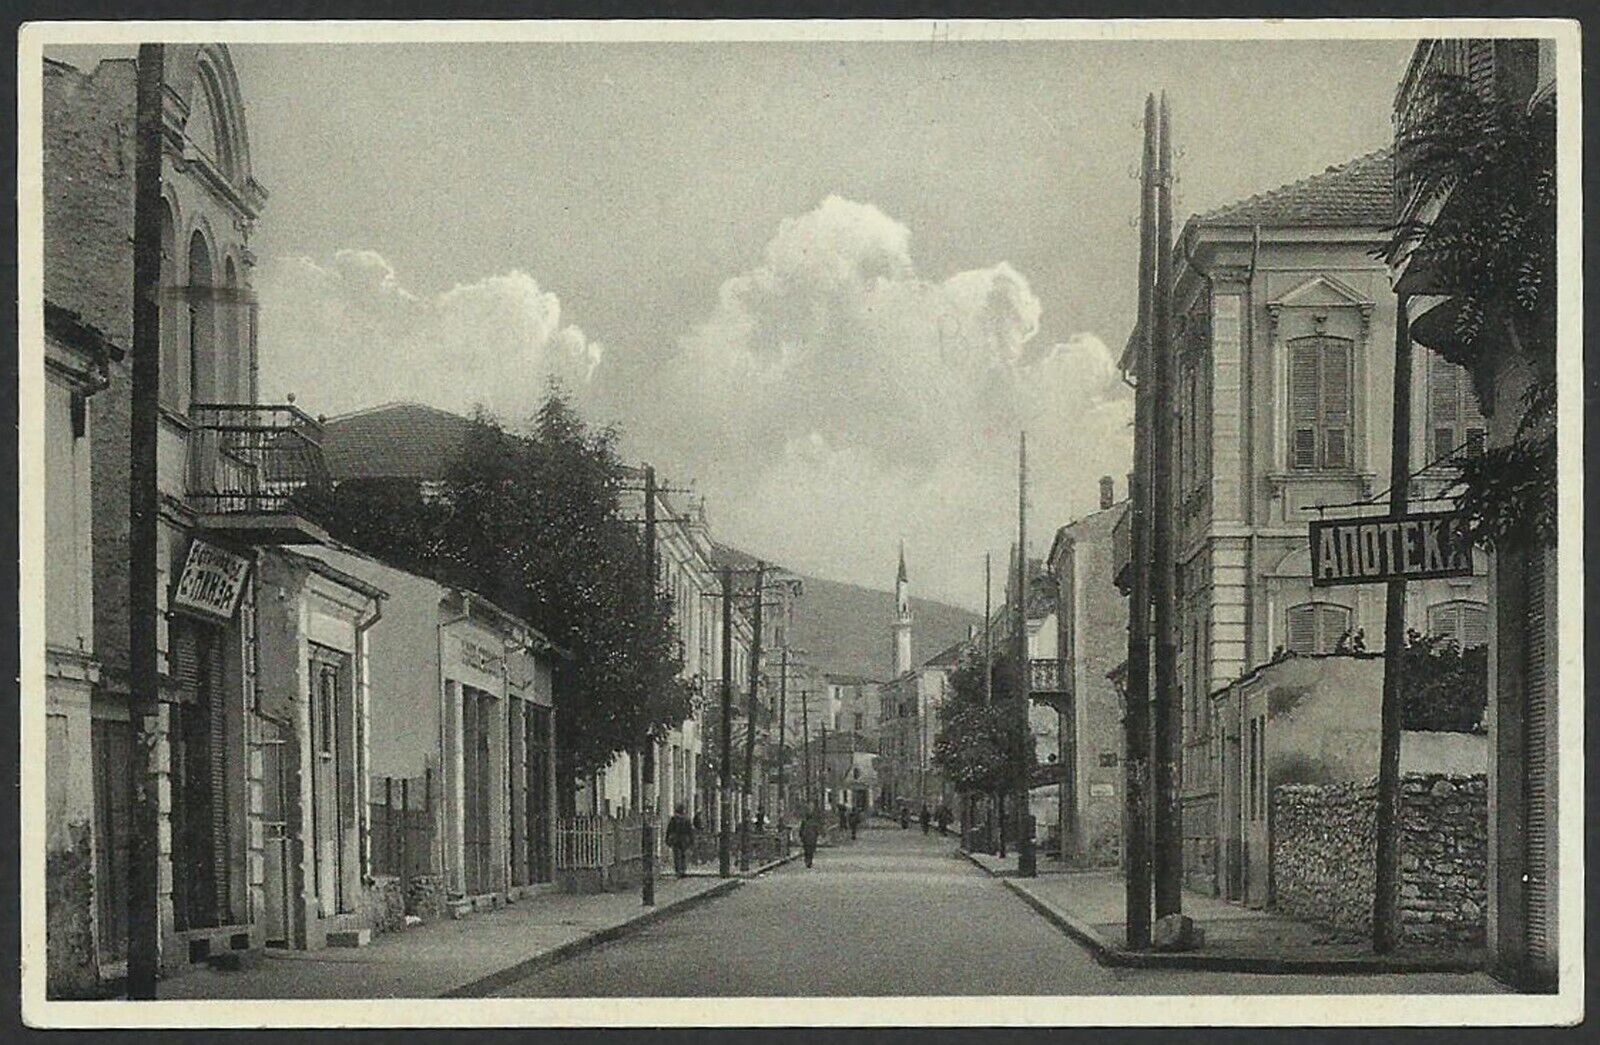 Bitola (Manastir-Monastir), Antique Postcard, King Peter Street, 1910s